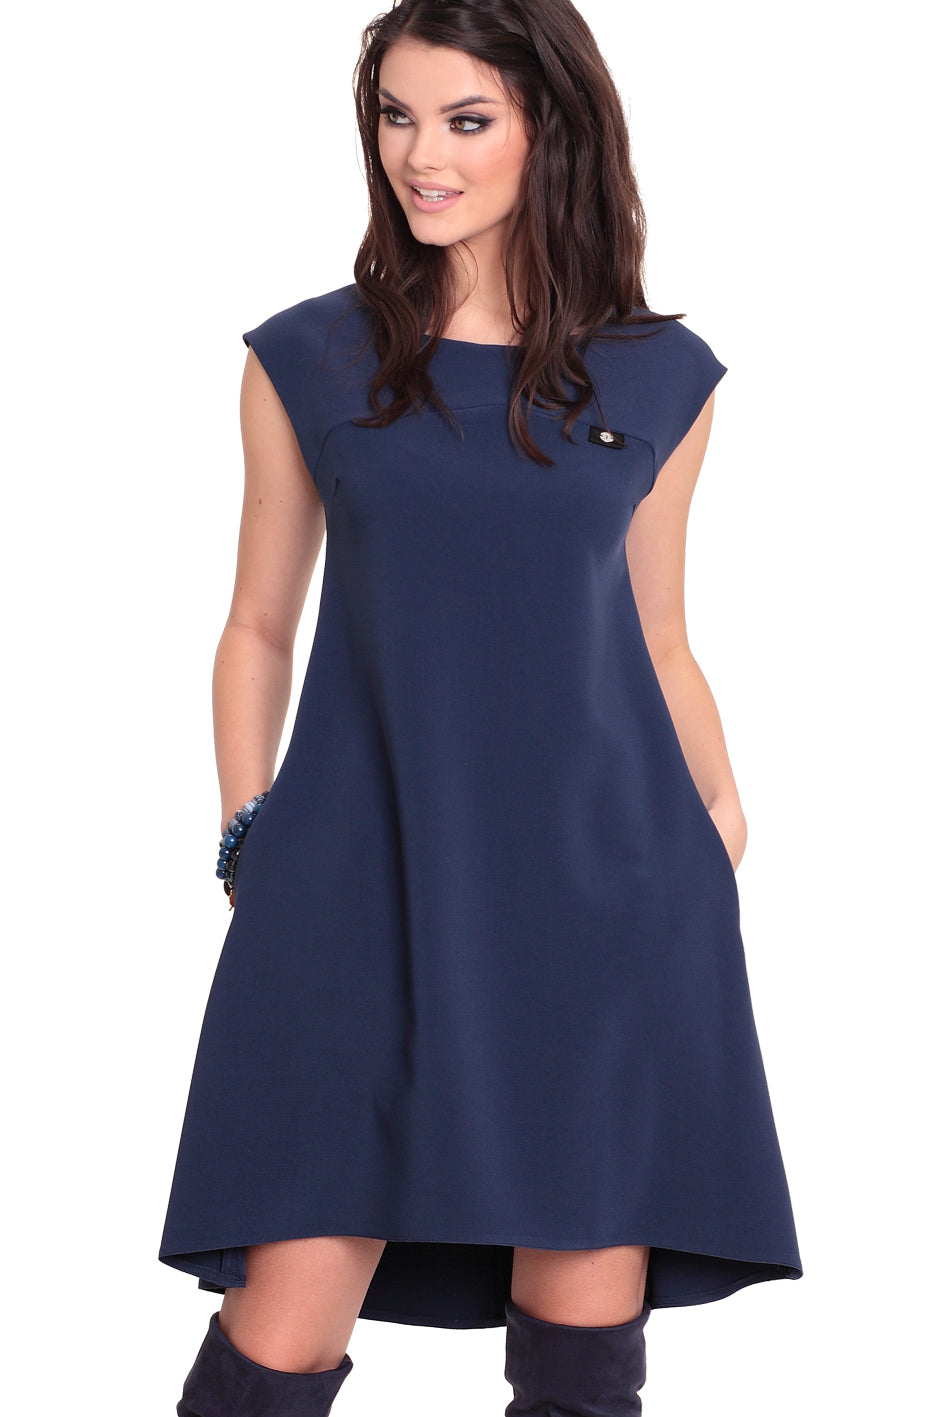 Dress SIMPLE MARABELLA navy blue